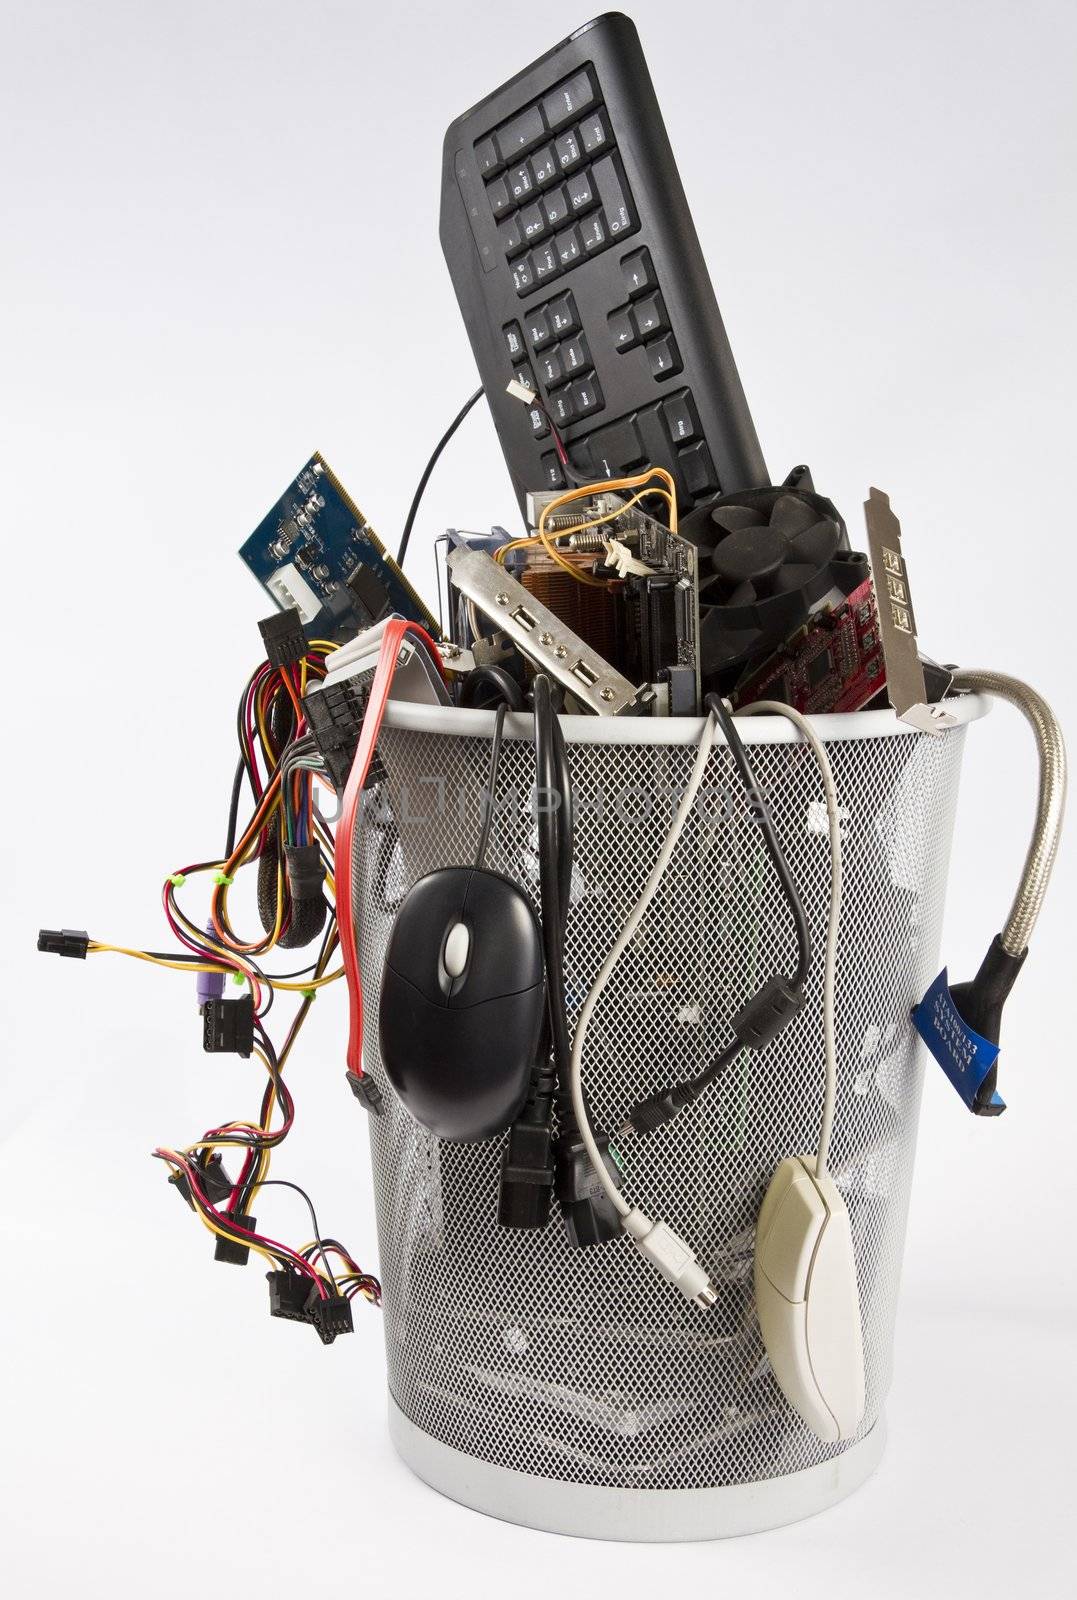 electronic scrap in trash can by gewoldi